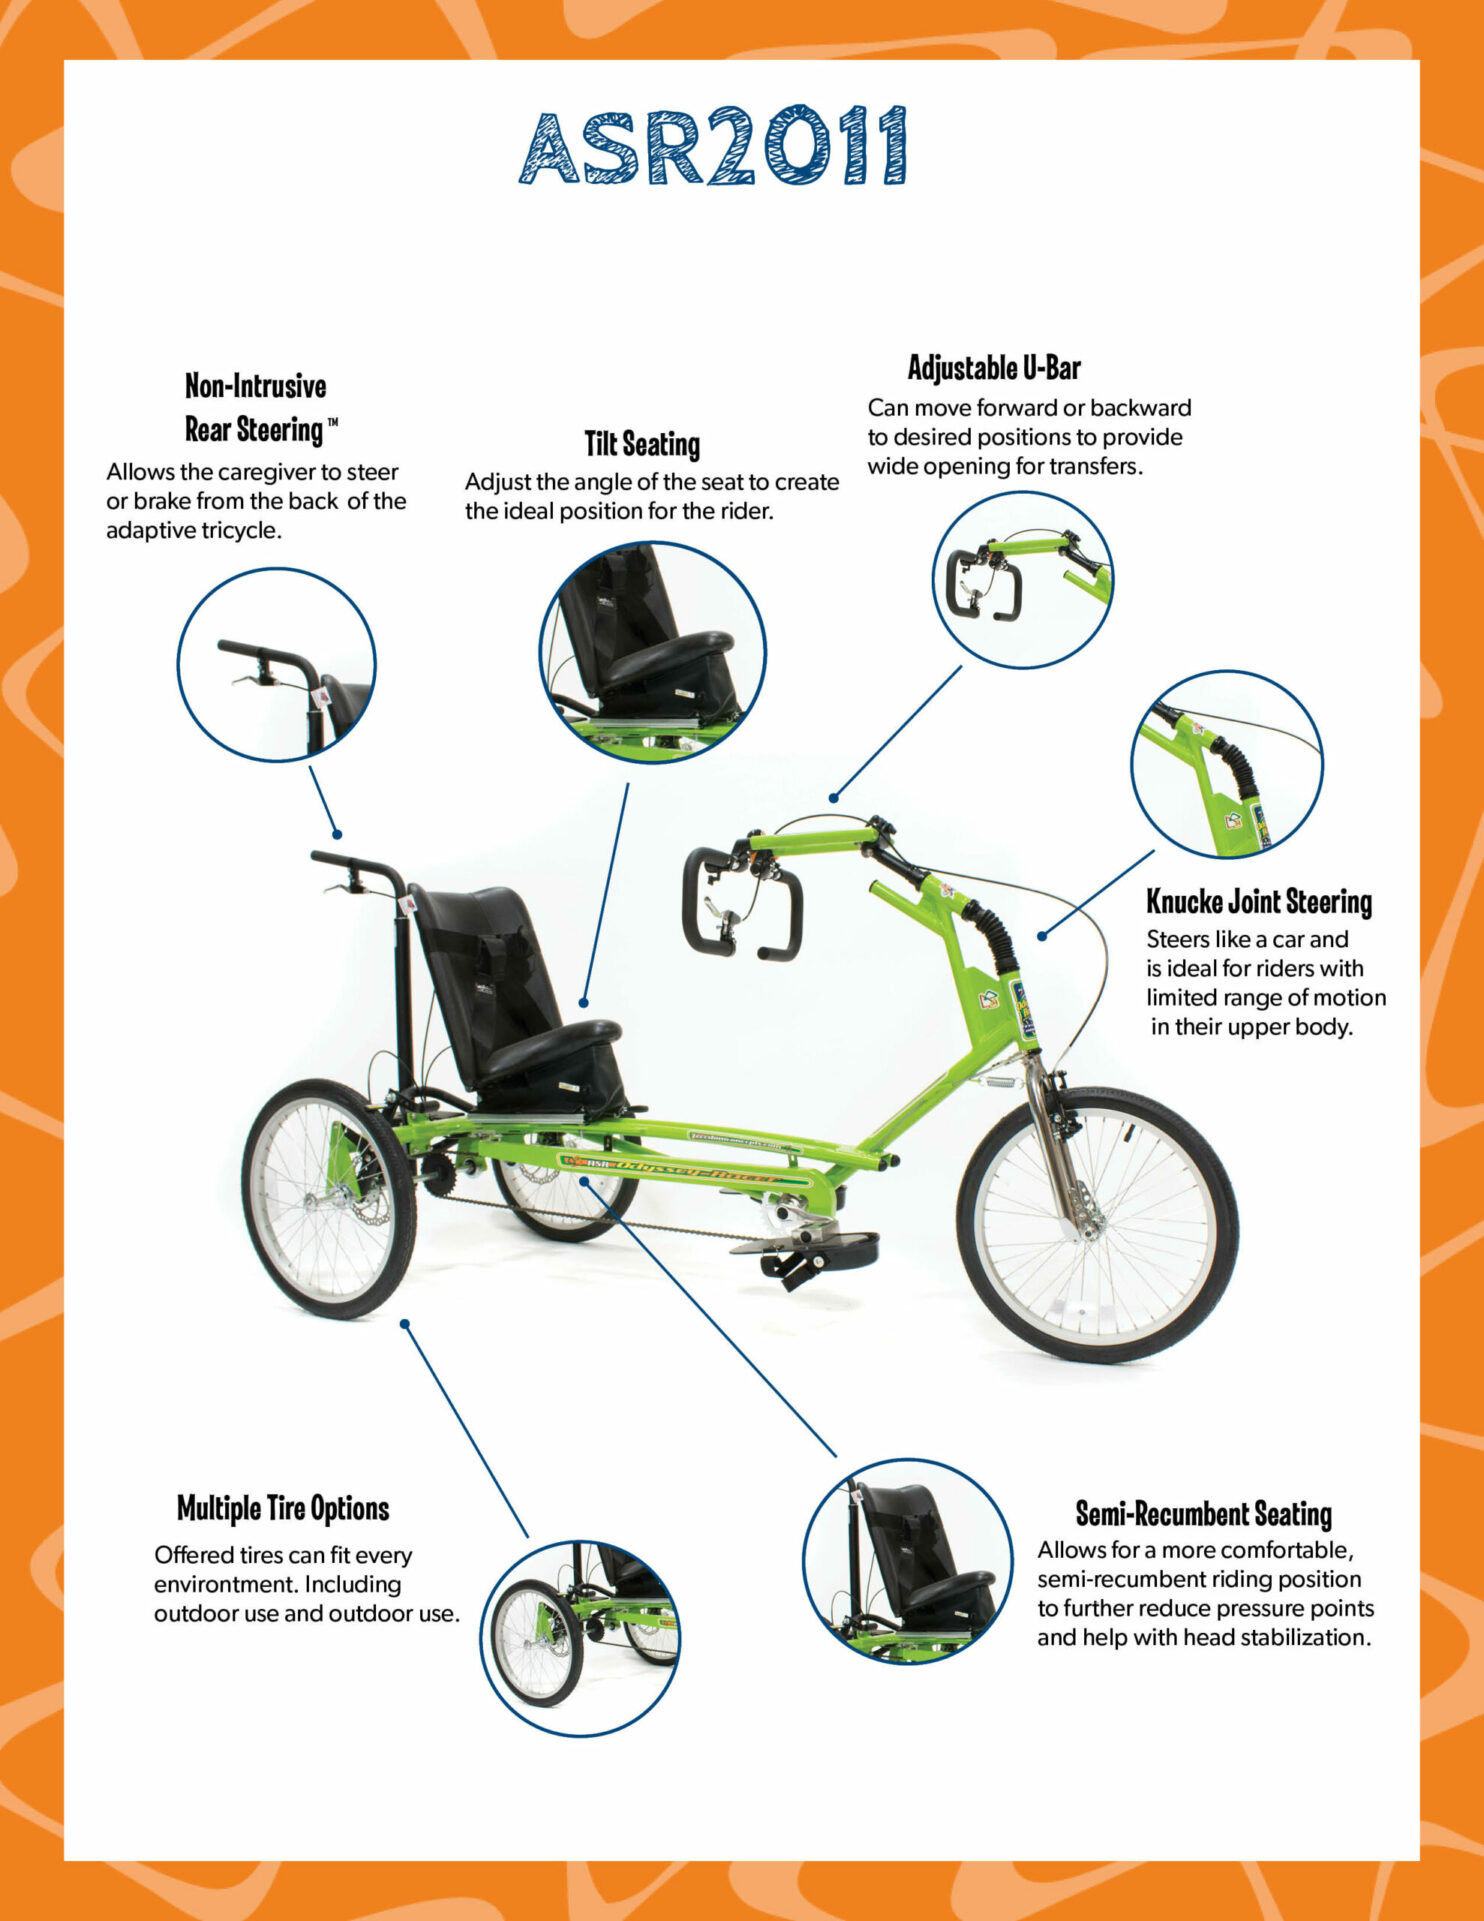 Tricycle electrique adolescent 2217 Freedom - Medical Domicile